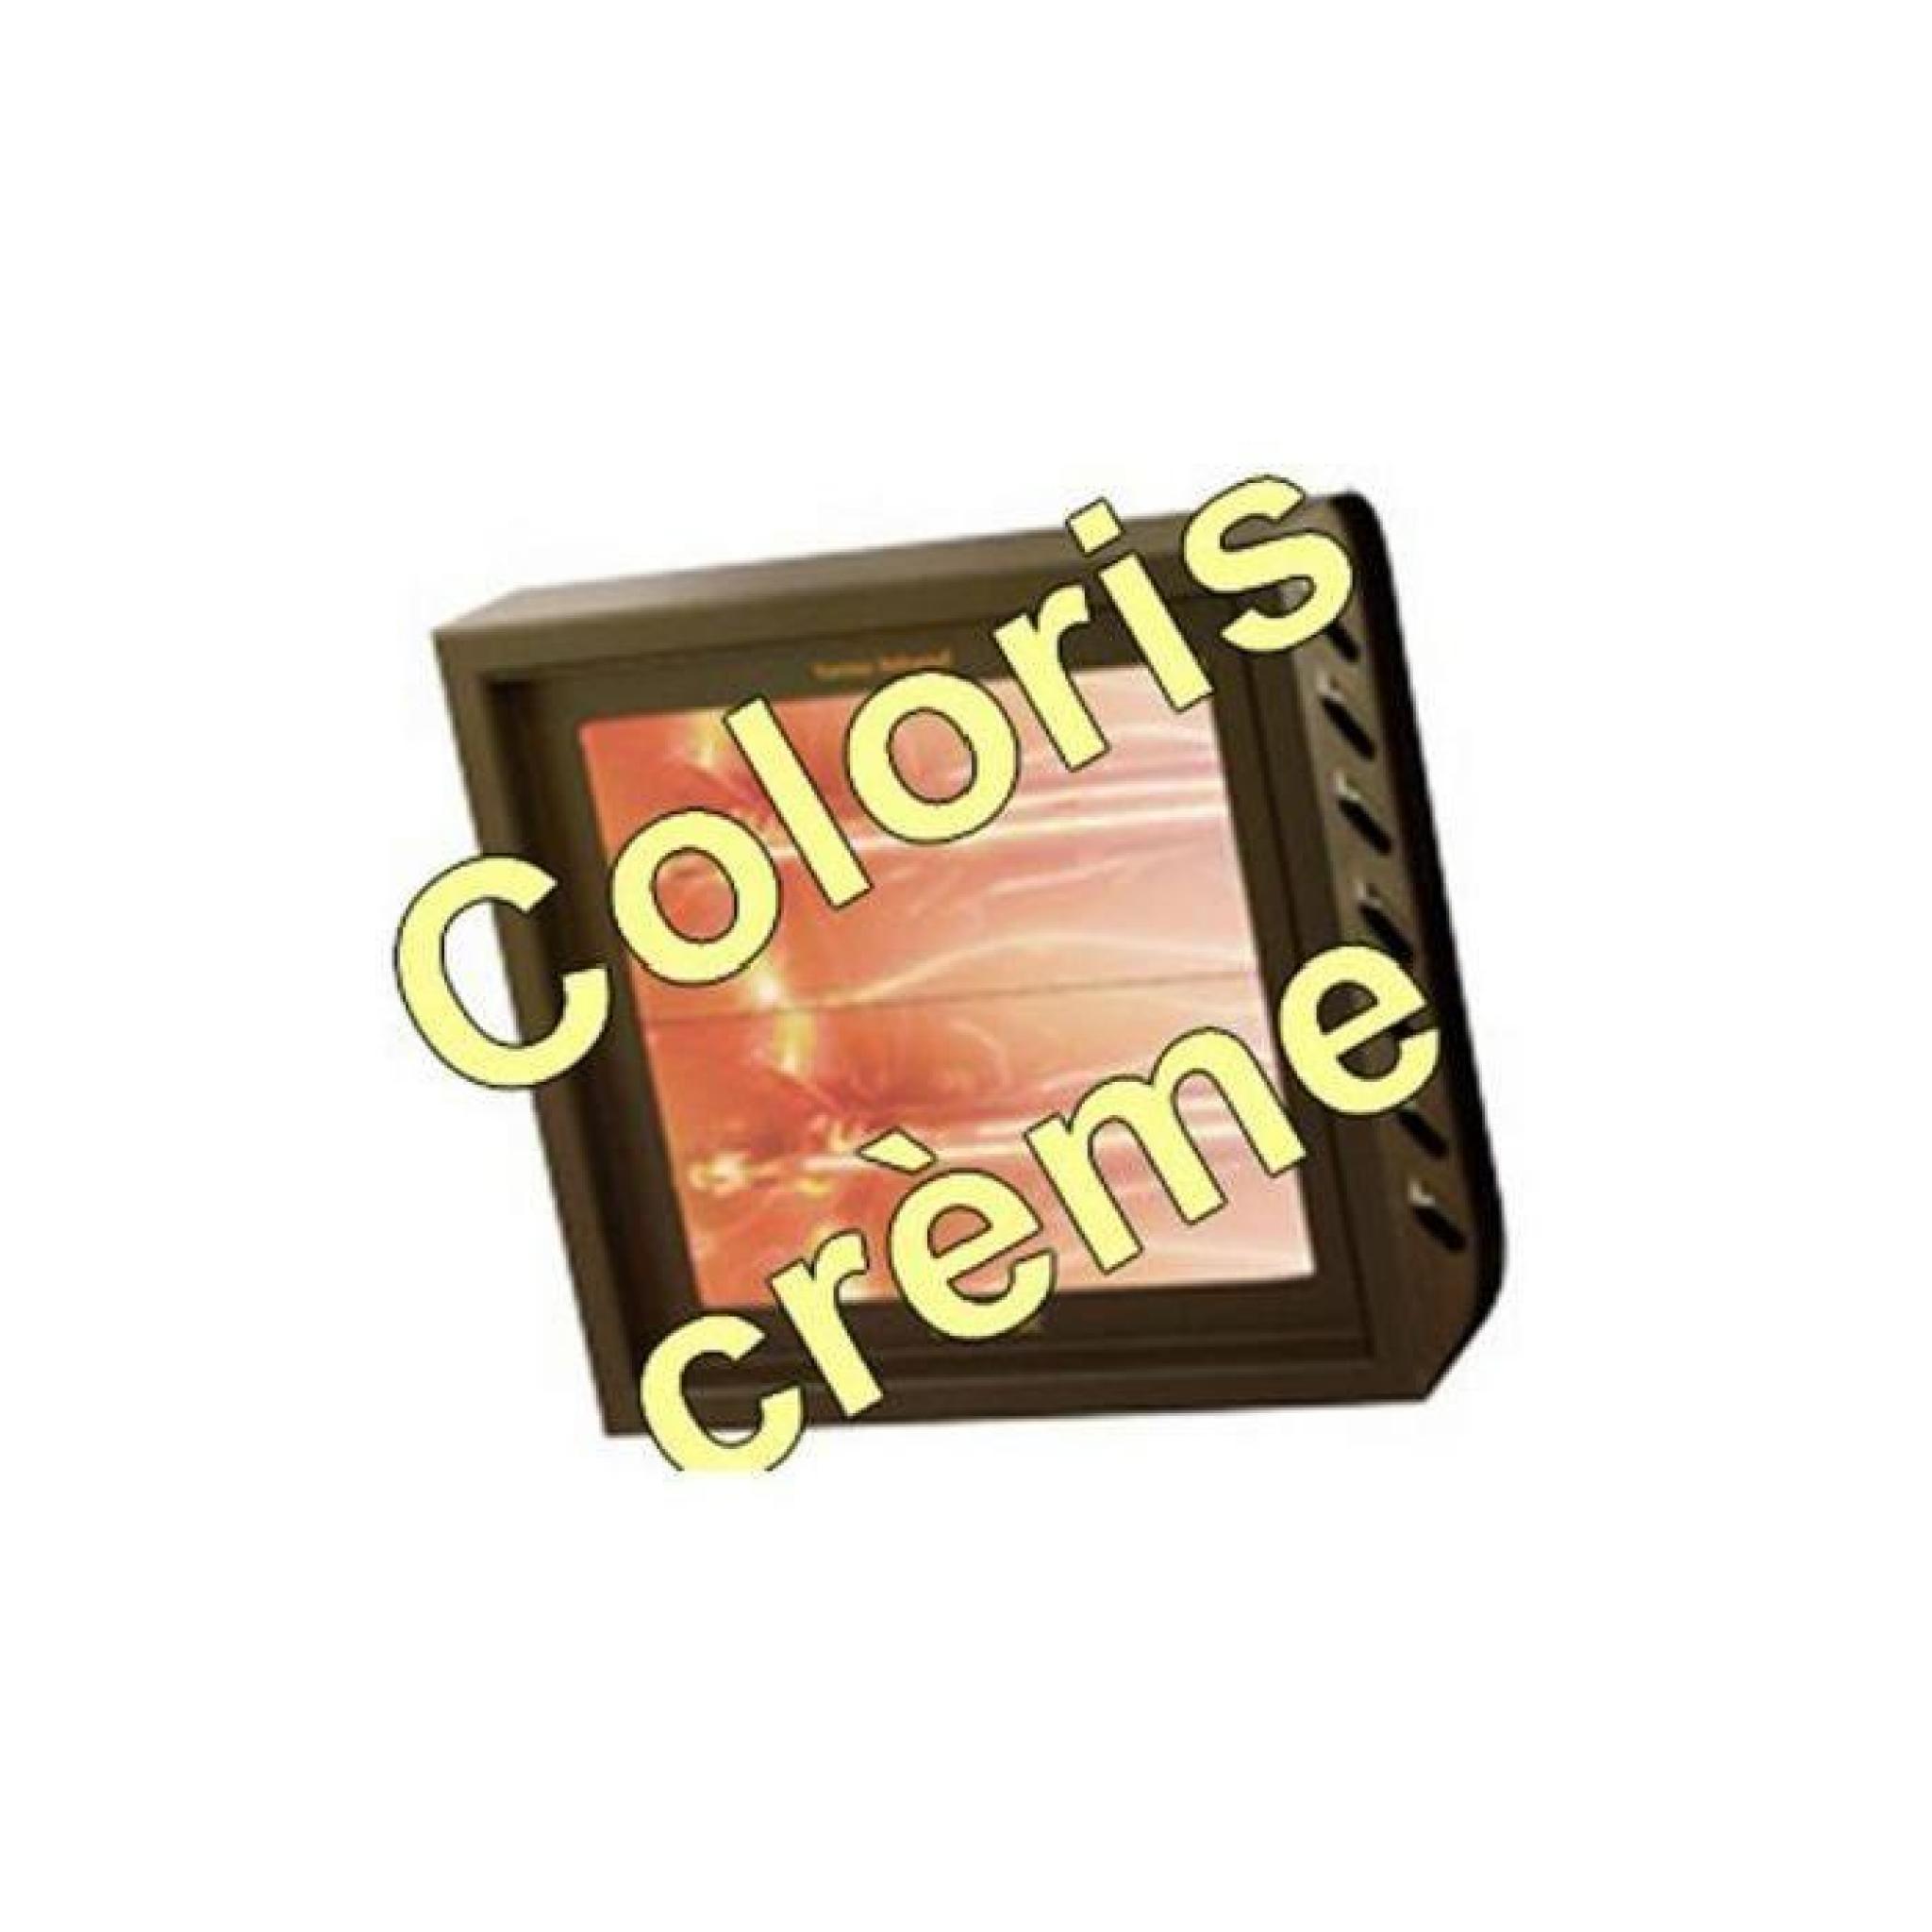 Chauffage infrarouge 3000W VARMA400 2V-30 Coloris Crème pas cher